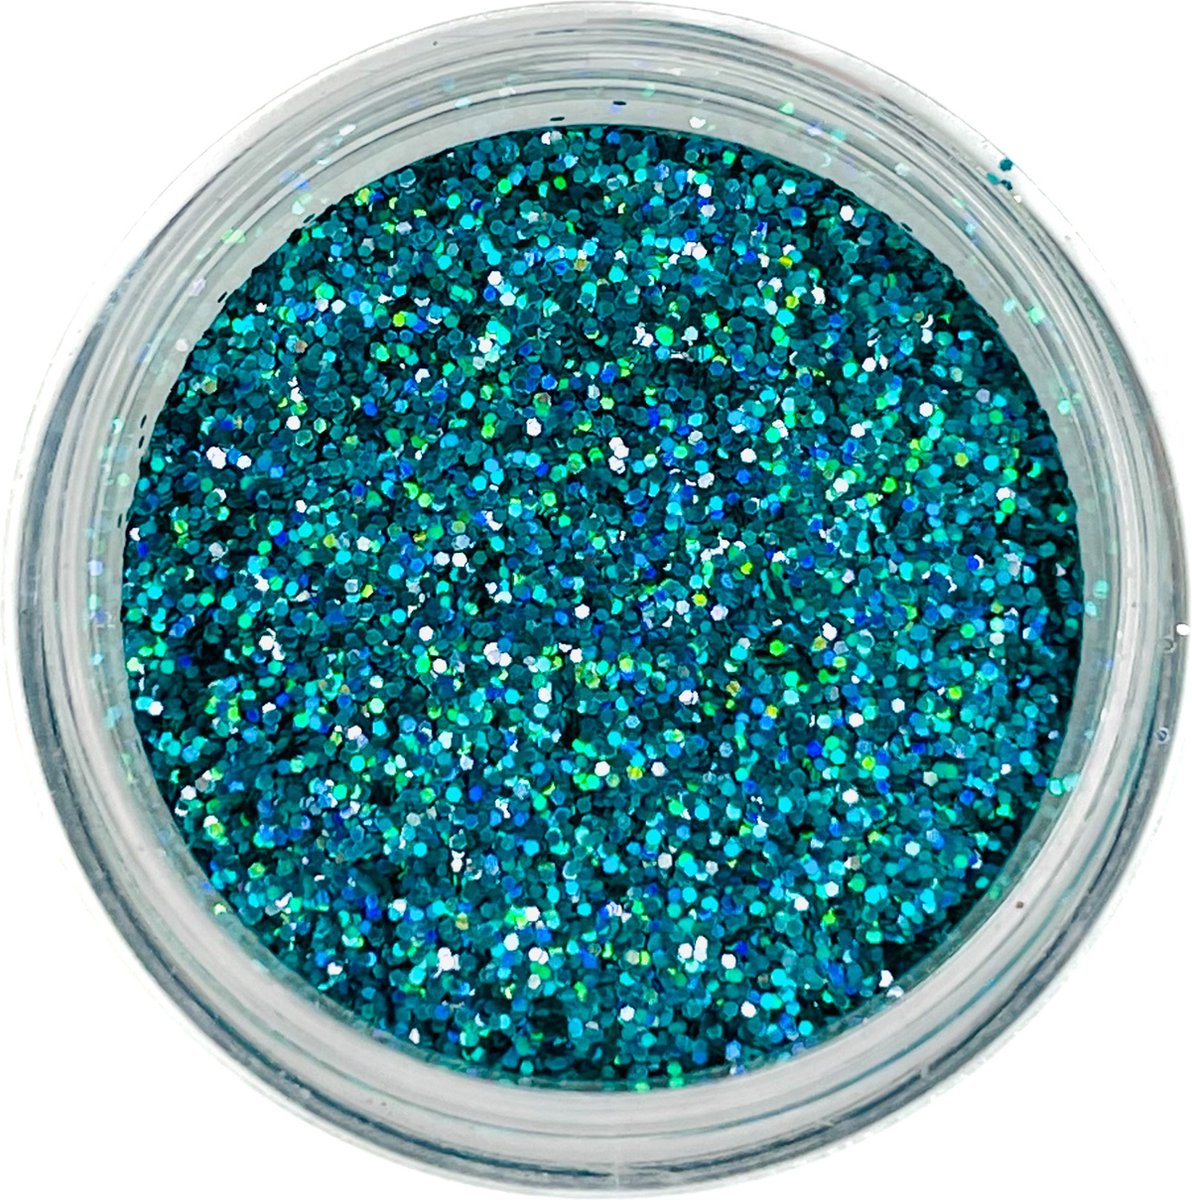 Roena's Beauty - Glitter - Turquoise